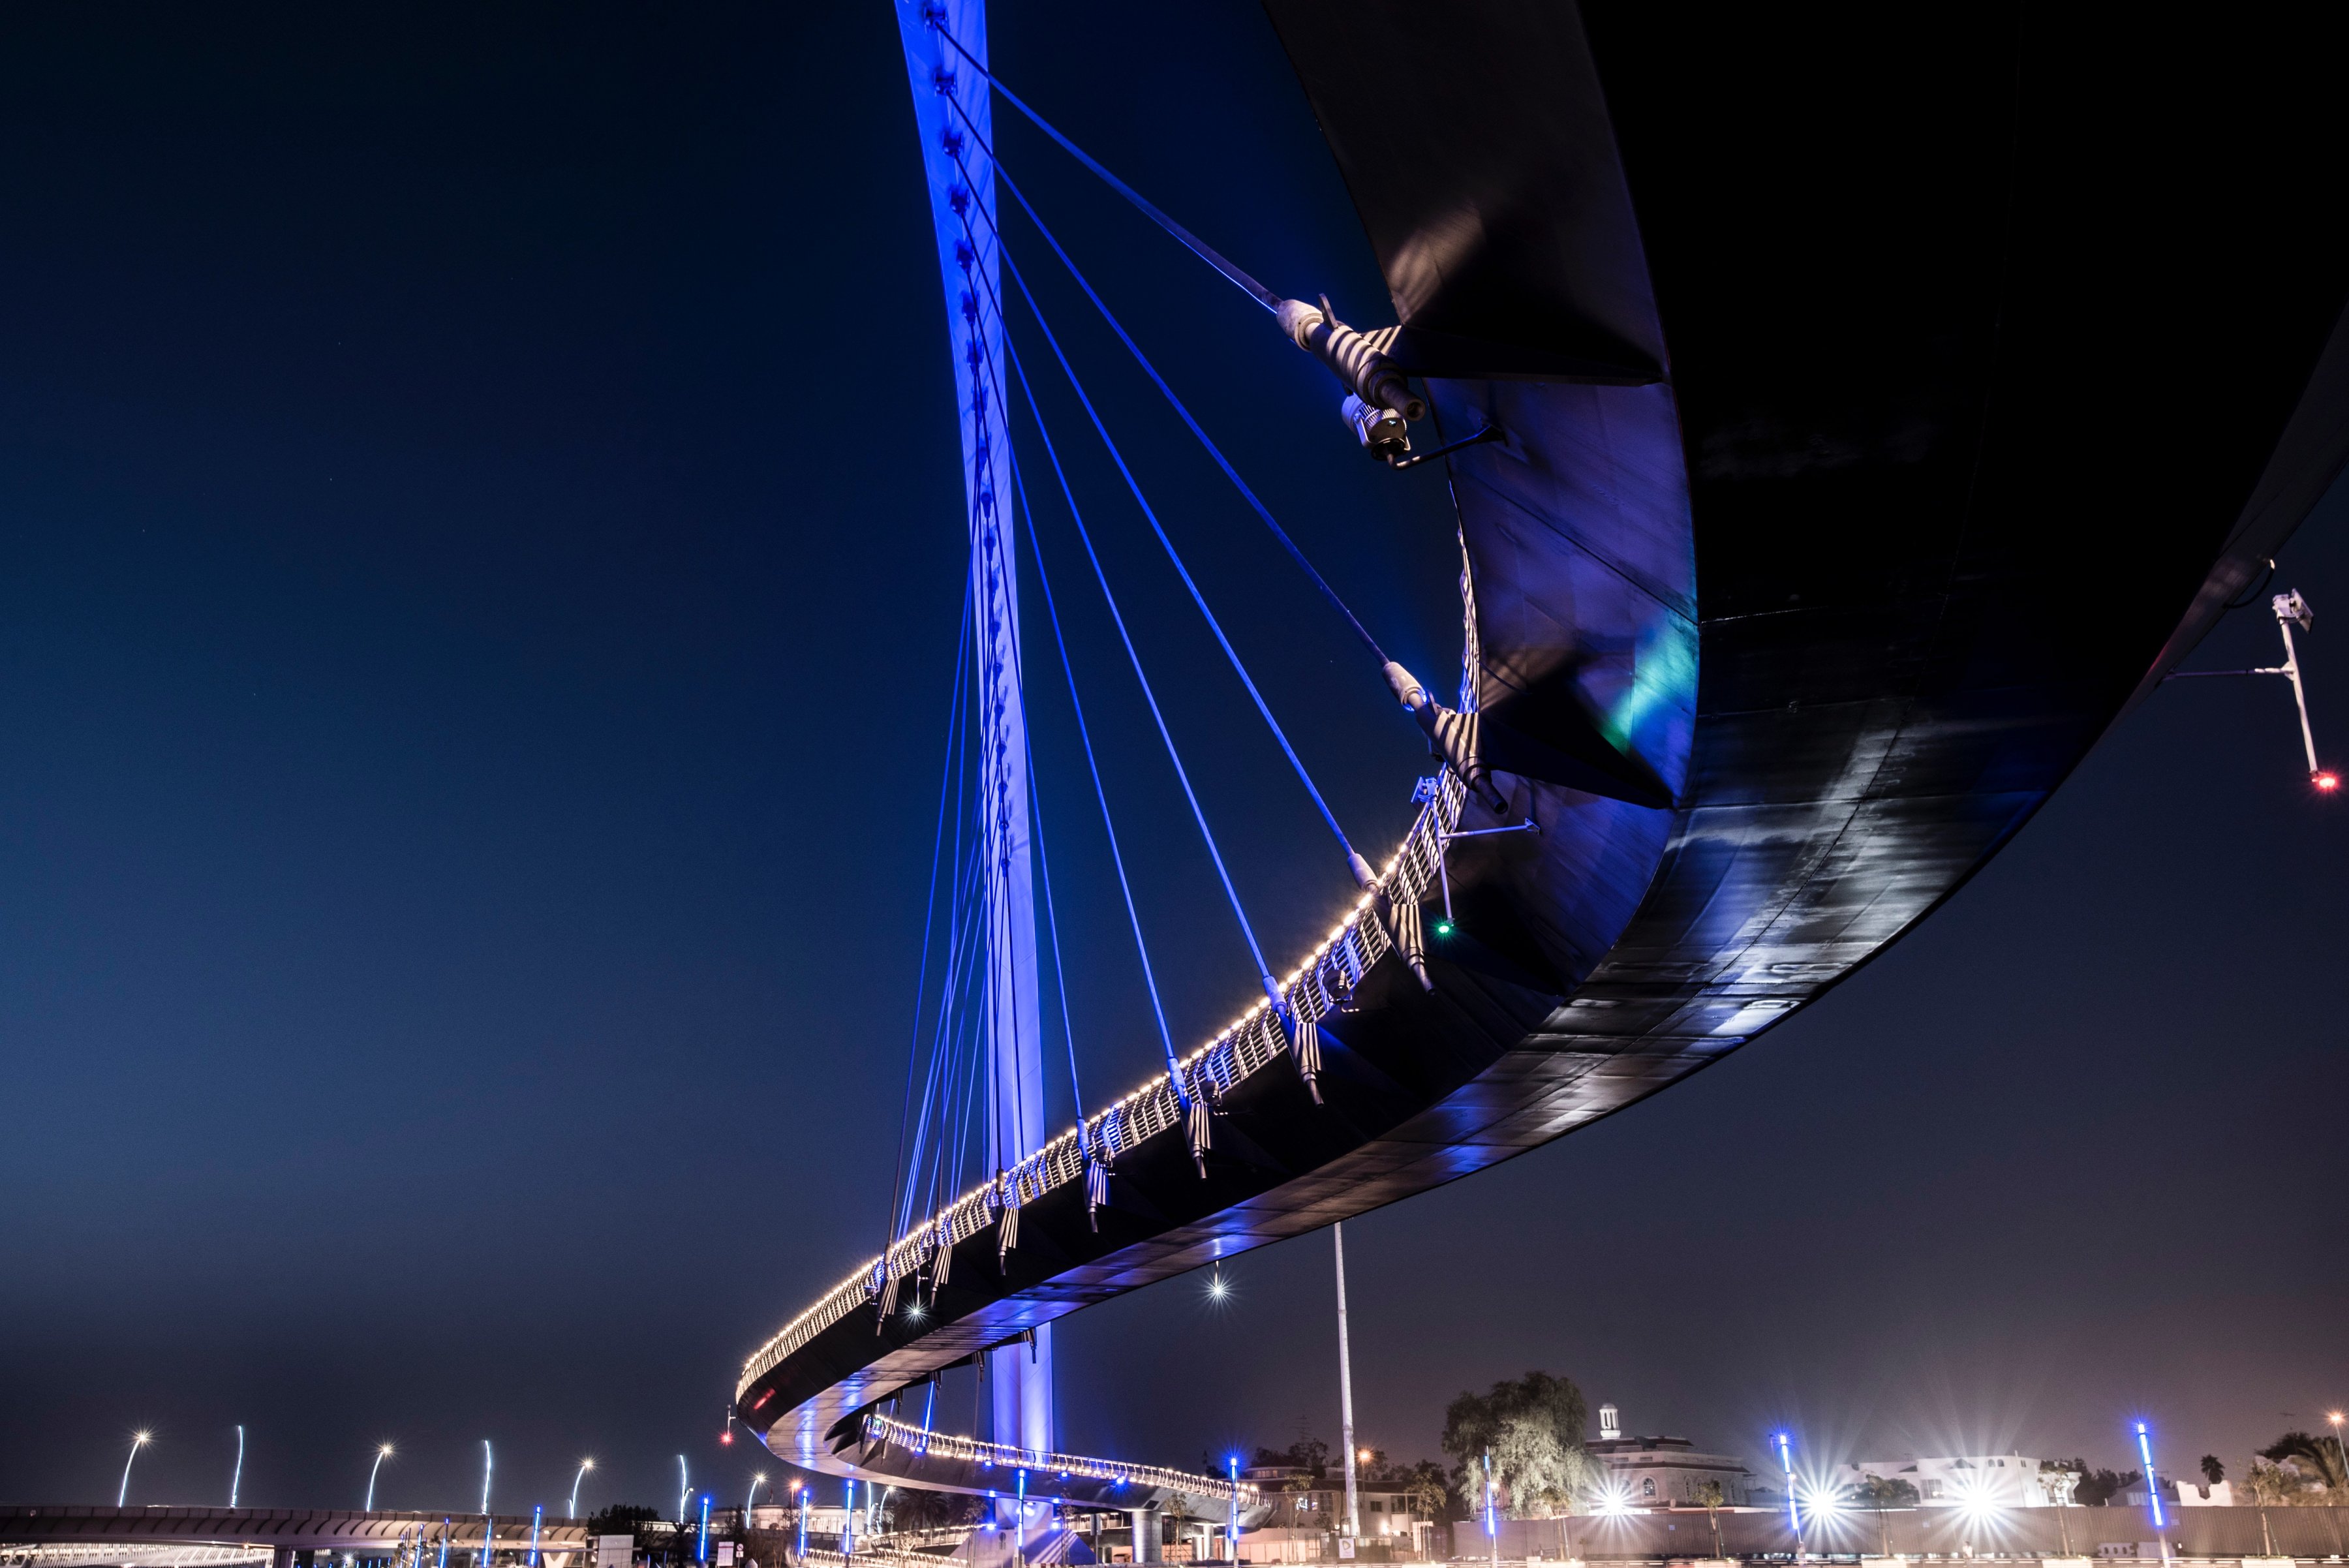 Sleek underside of a bridge at night